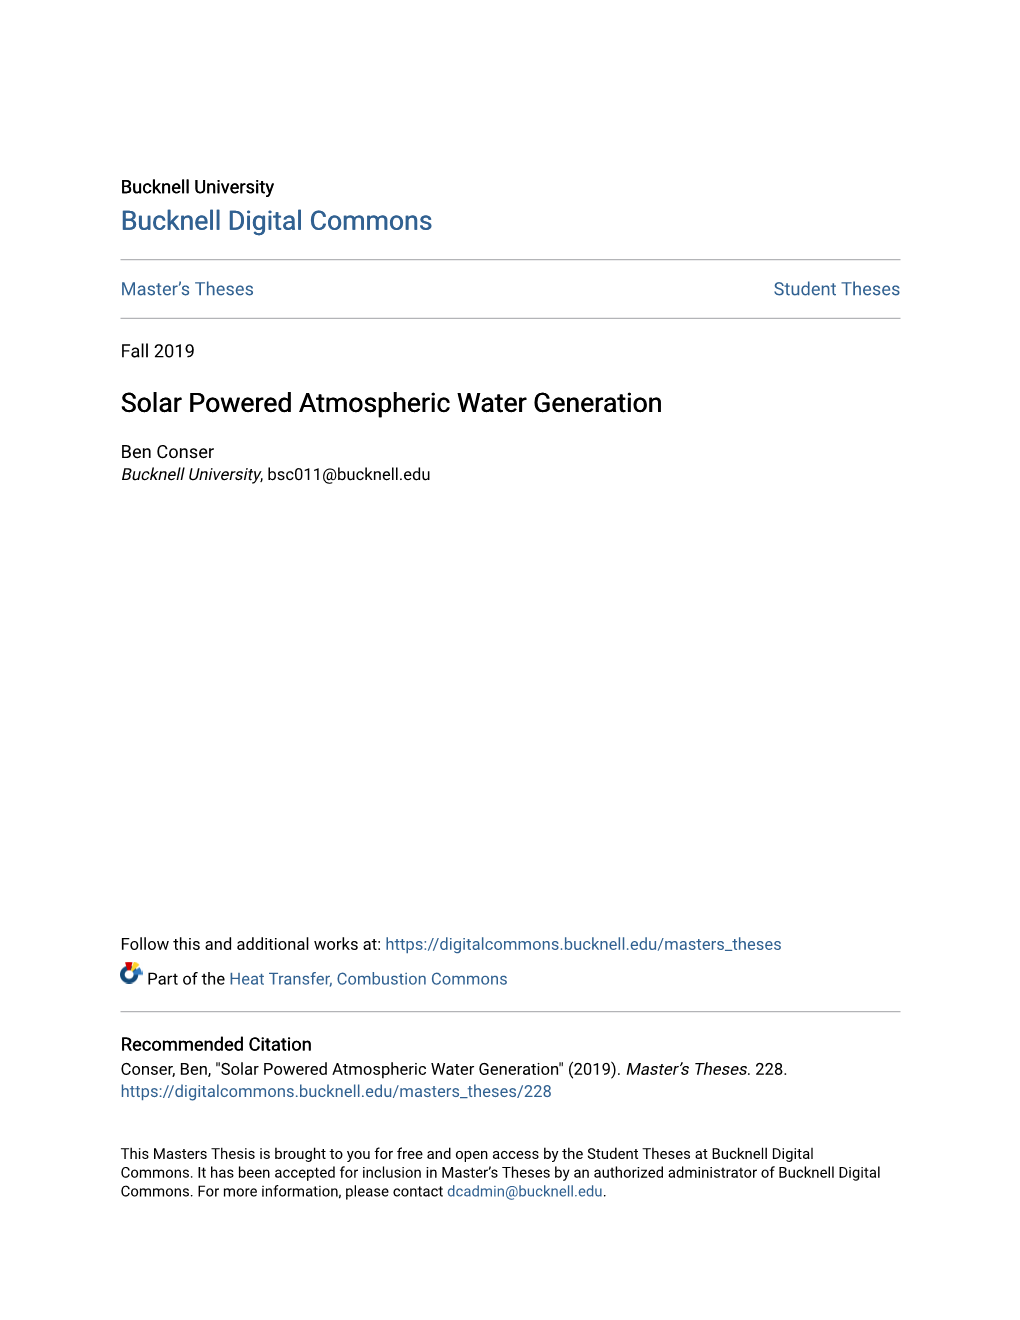 Solar Powered Atmospheric Water Generation